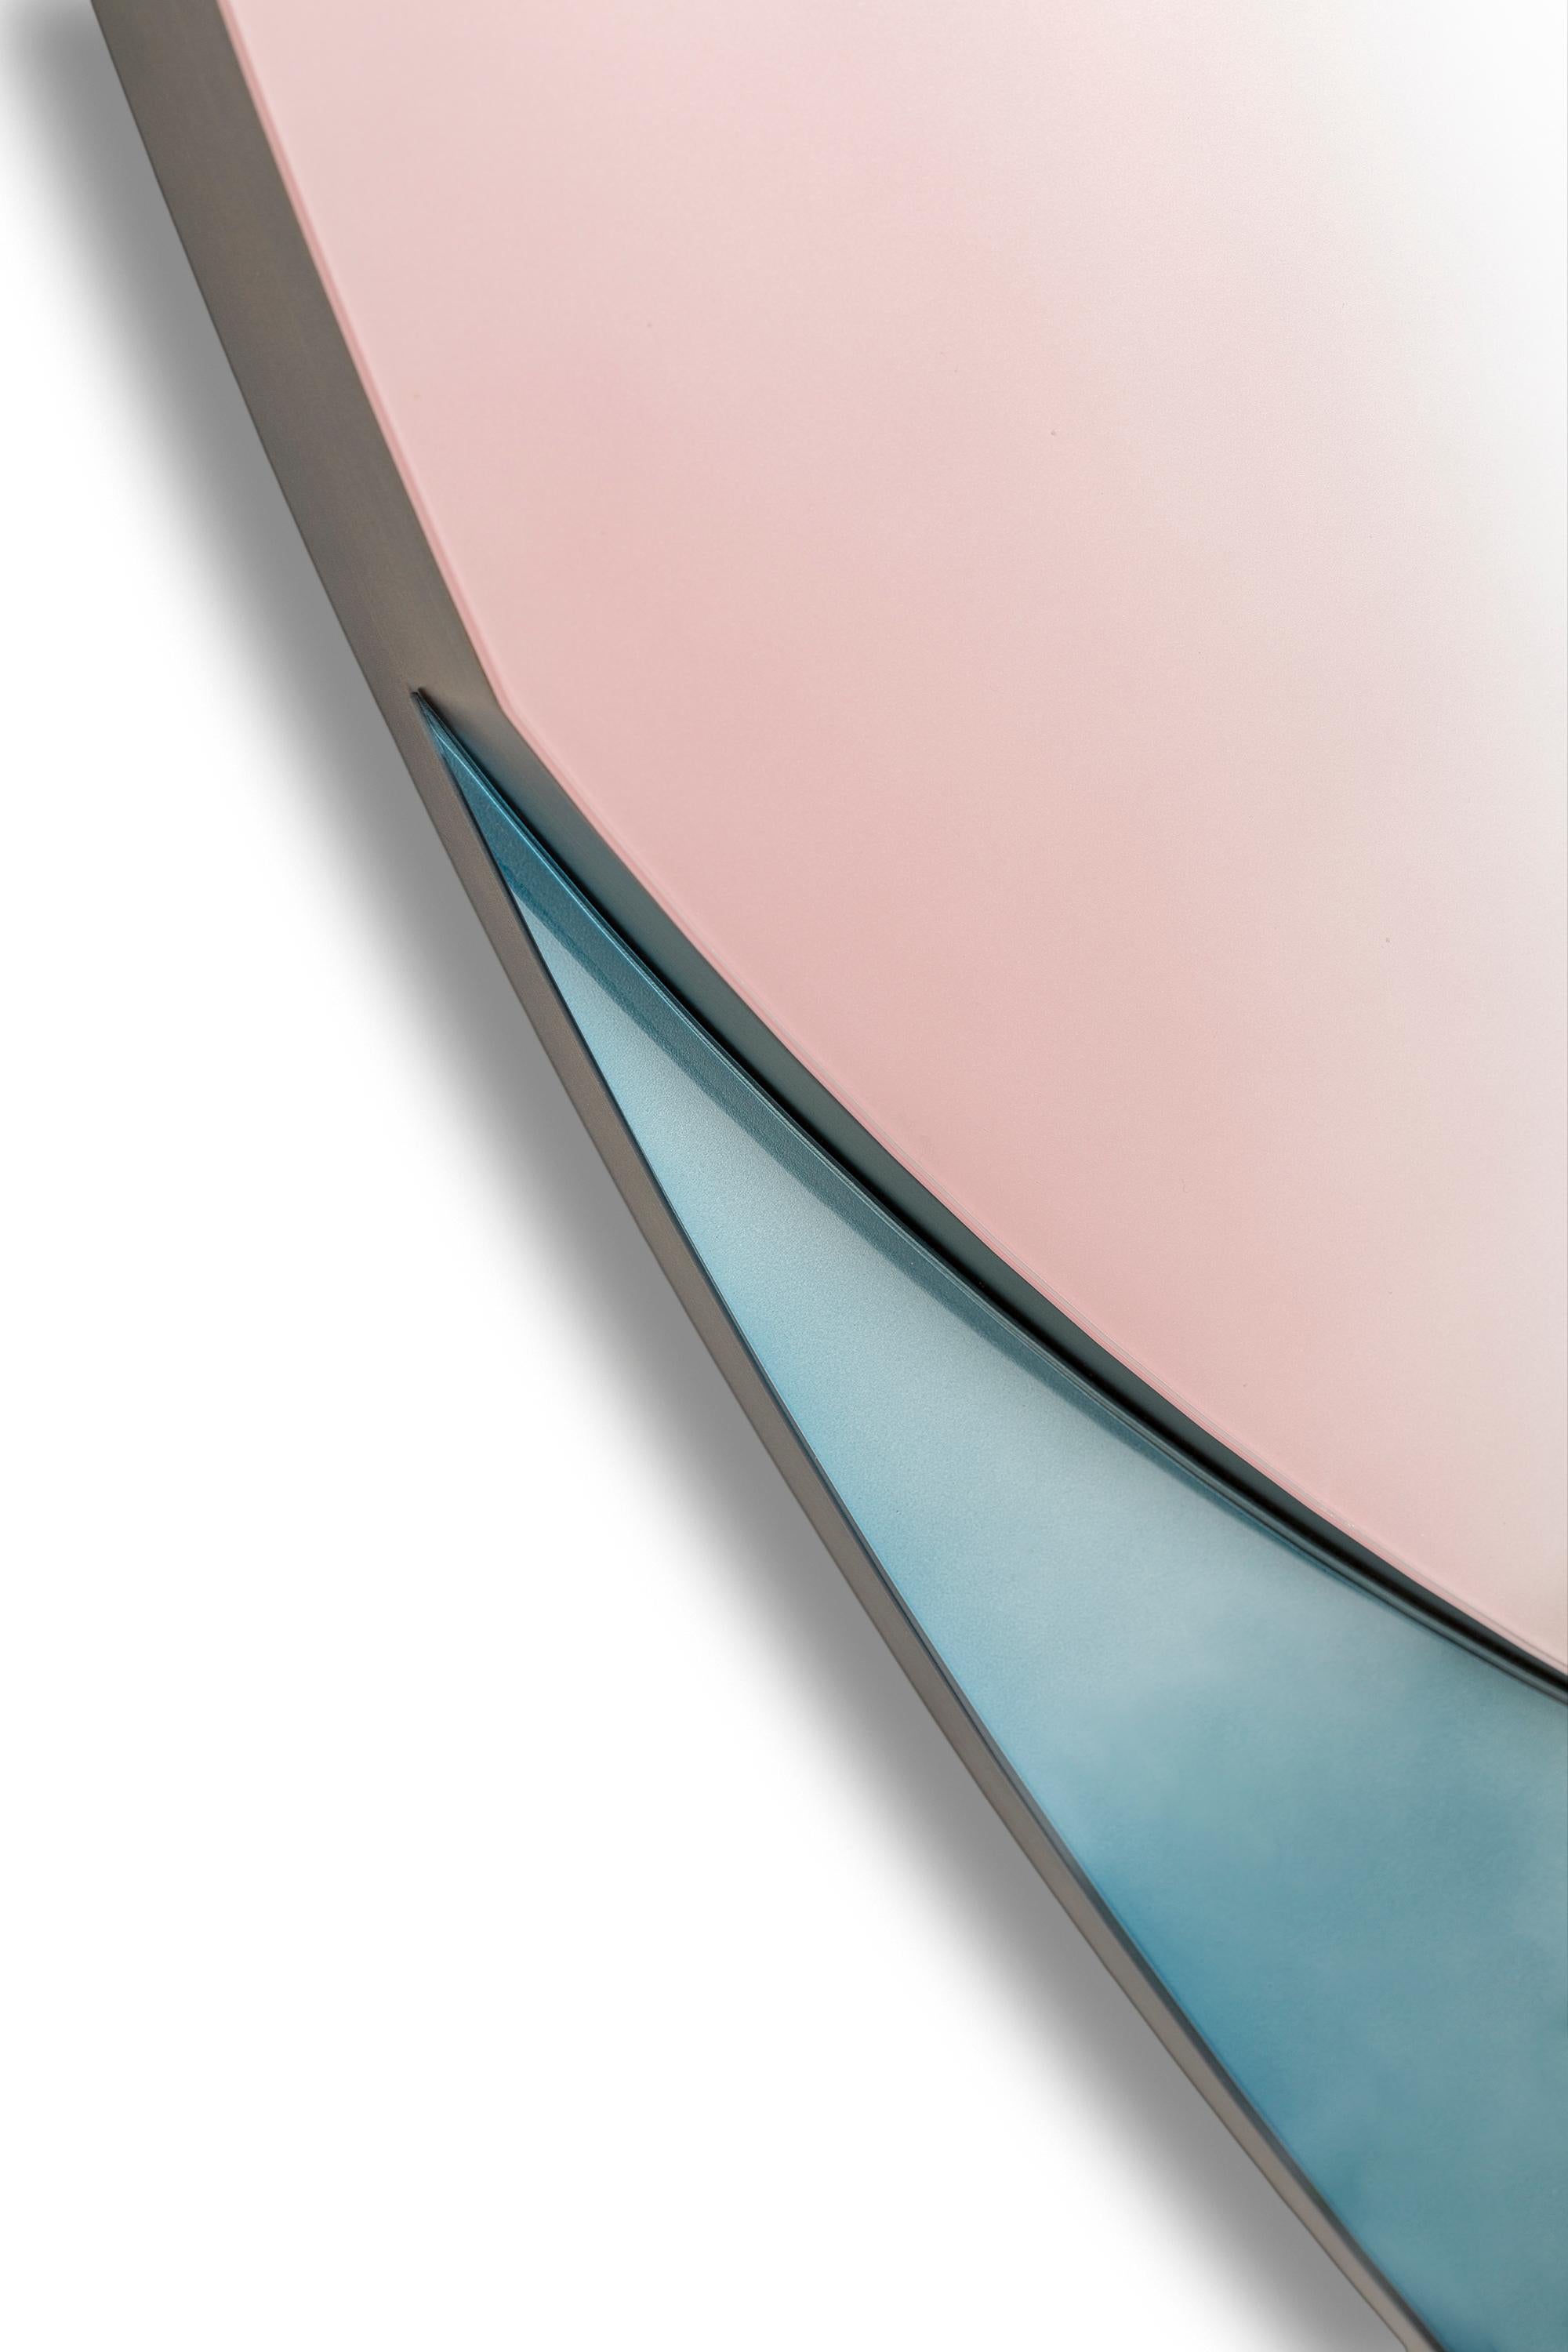 Minimalist Specchio #3, Trio Mirror in Pink, Azure and Yellow For Sale